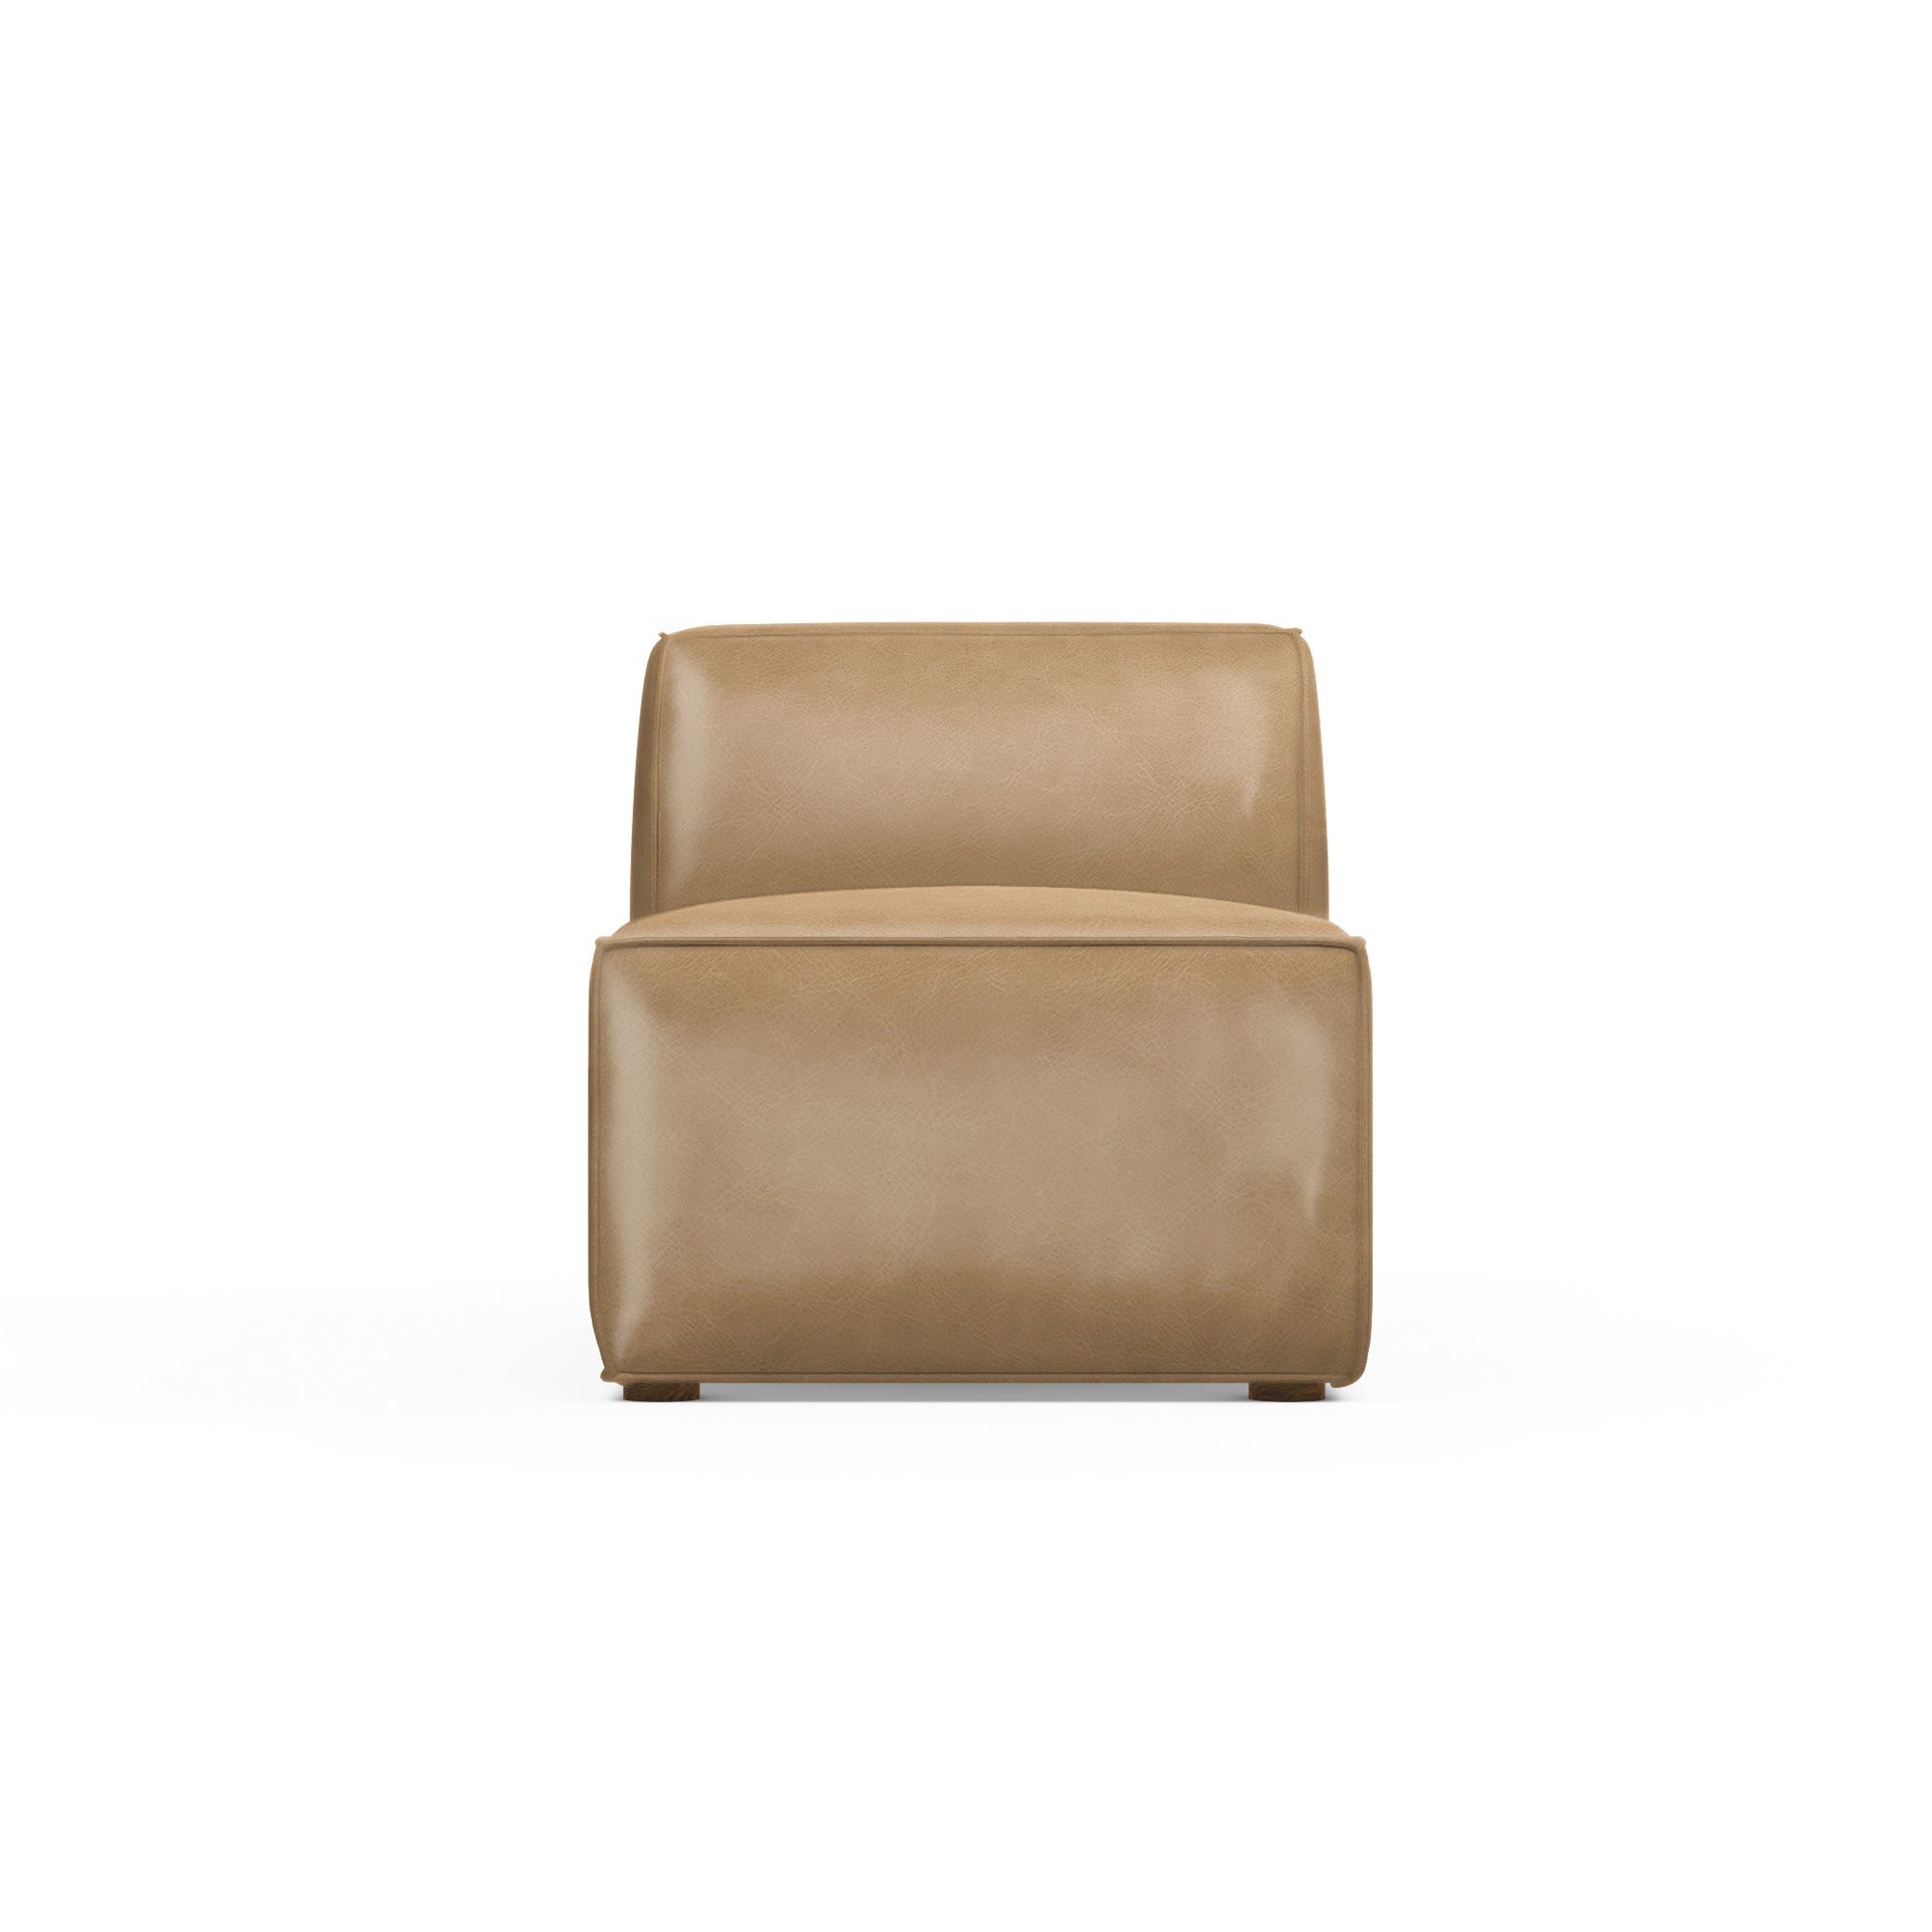 Varick Armless Chair - Marzipan Vintage Leather